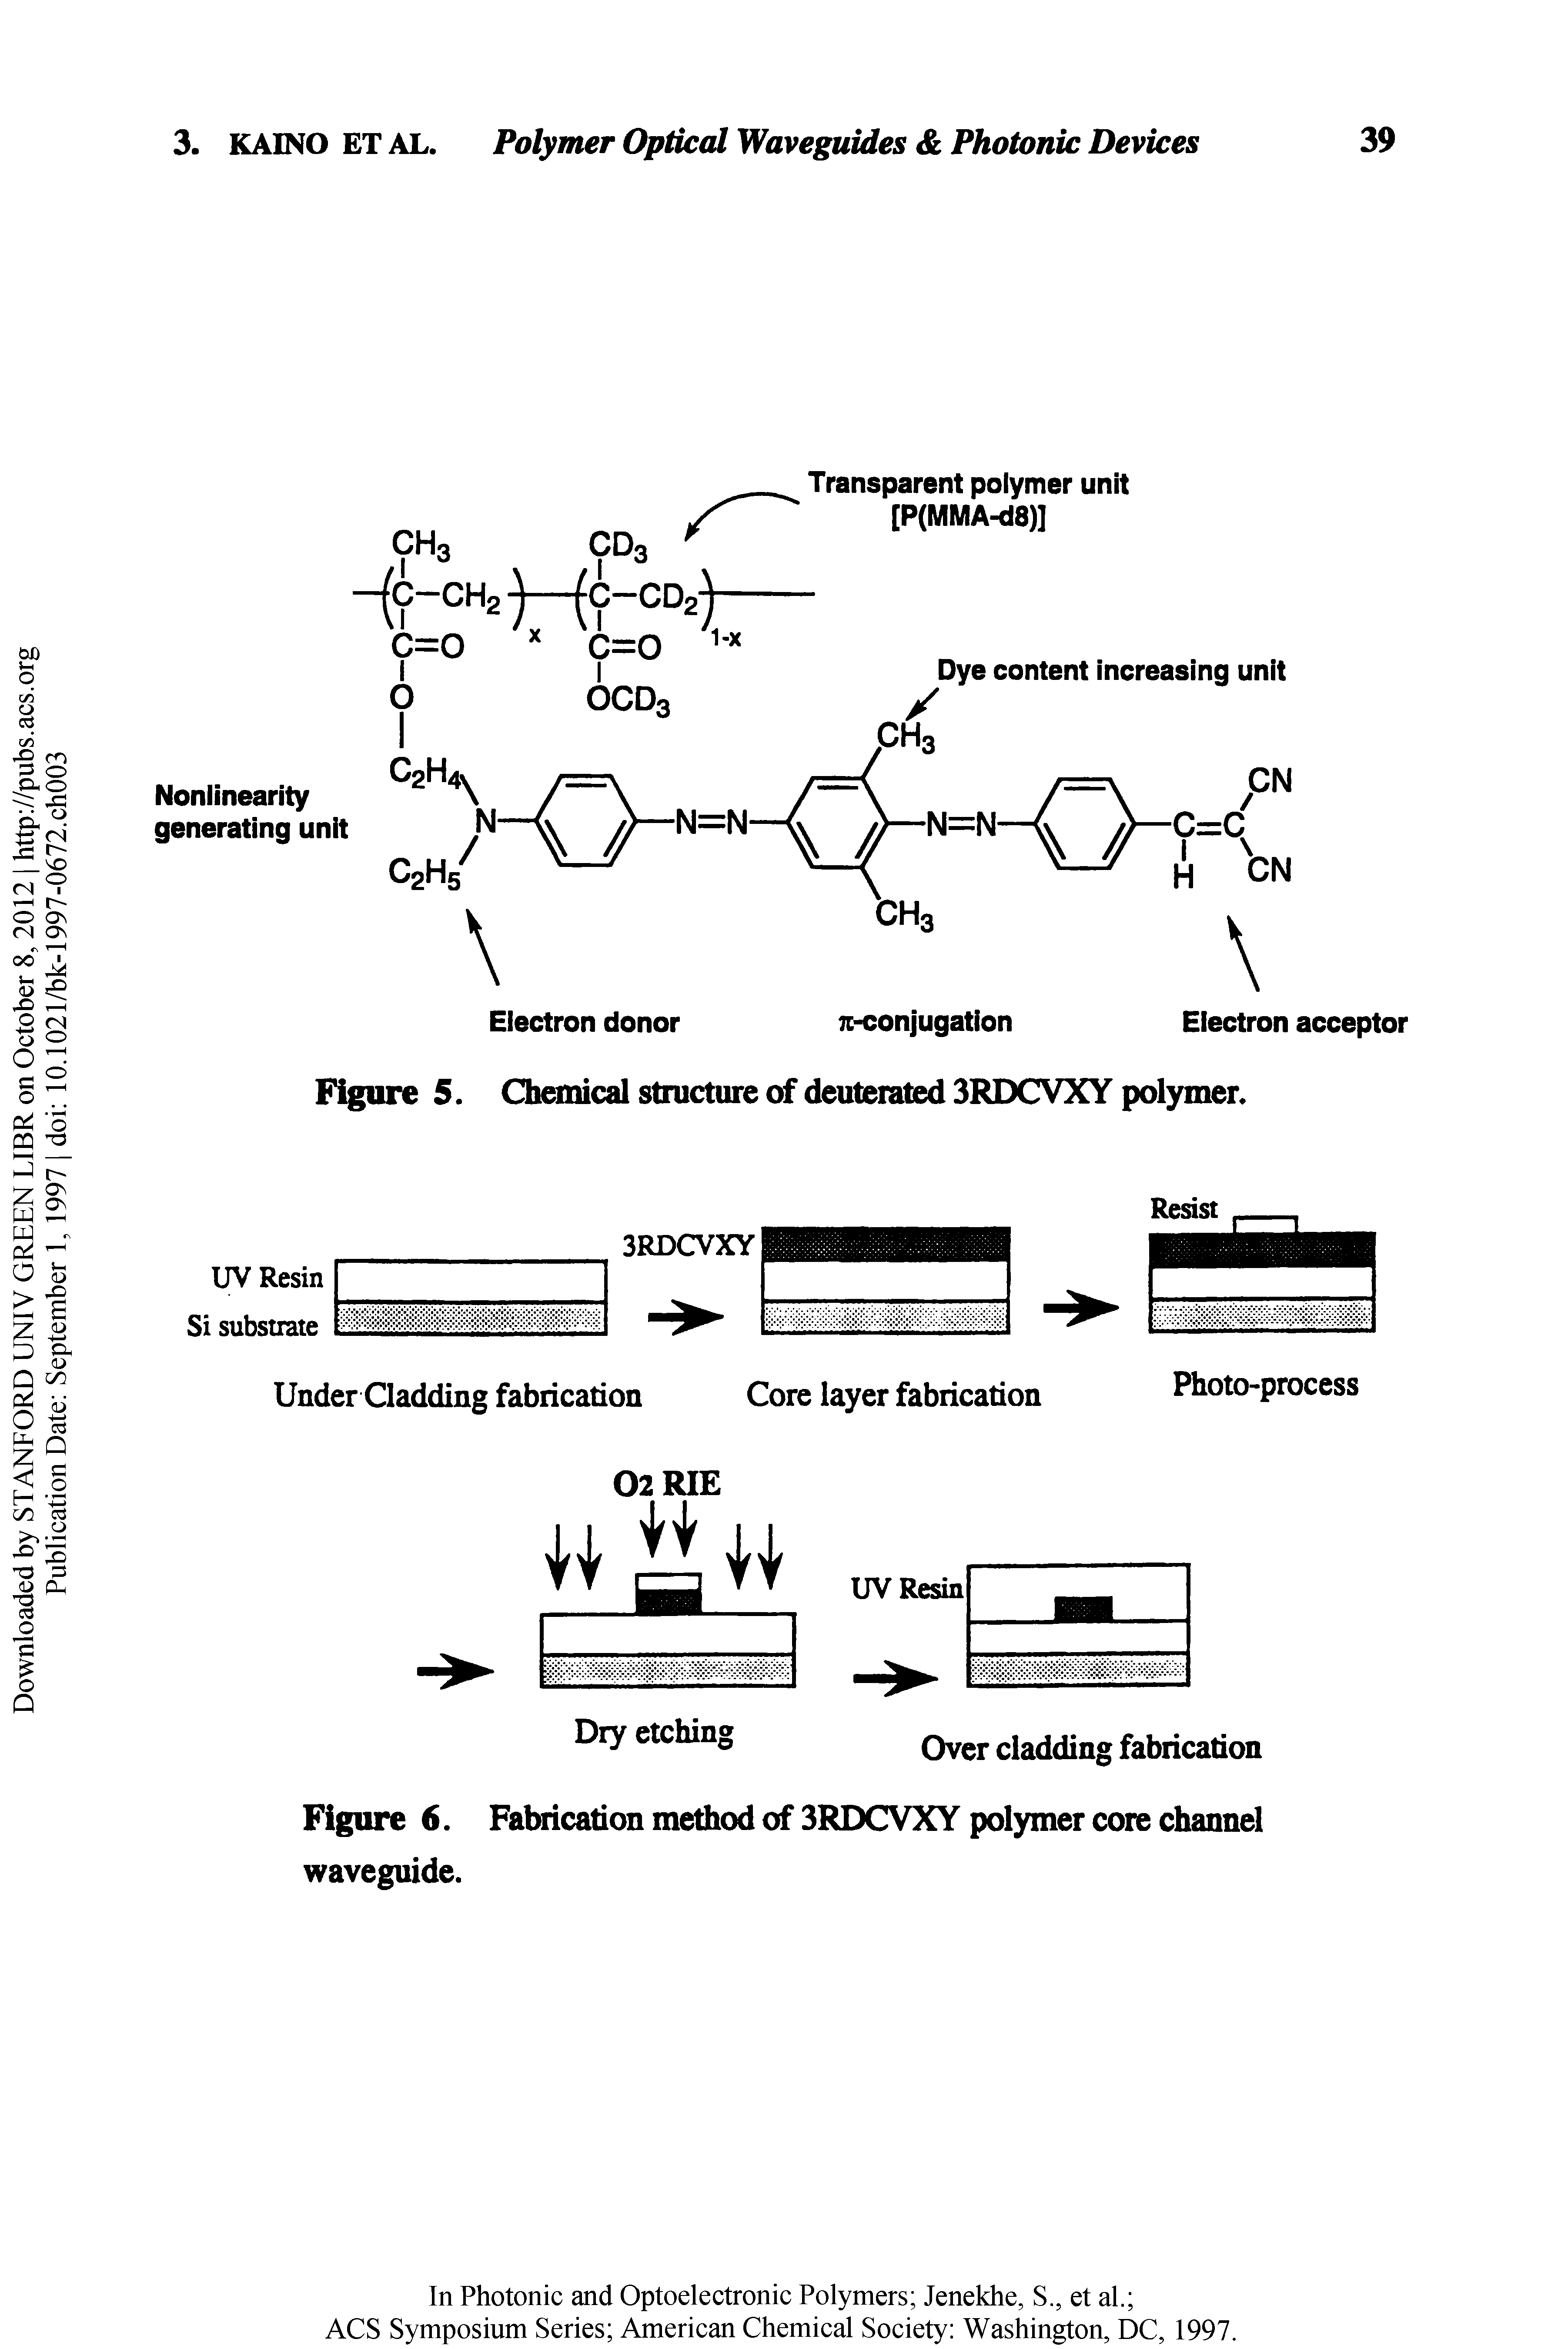 Figure 6. Fabrication method of 3RDCVXY polymer core channel waveguide.